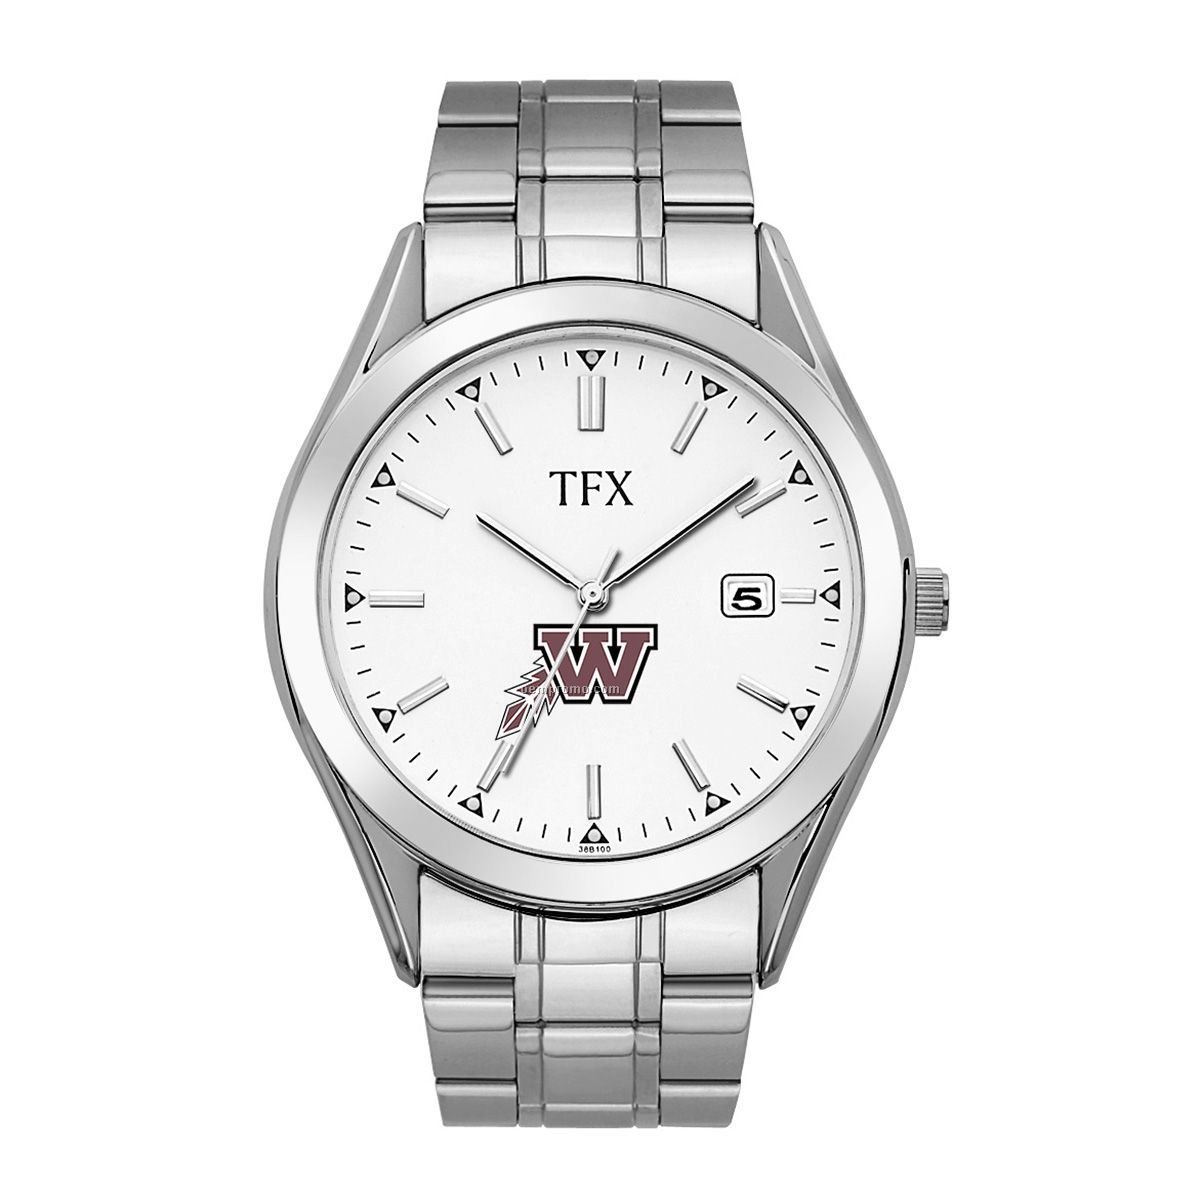 Tfx Distributed By Bulova- Men's Analog Wrist Watch